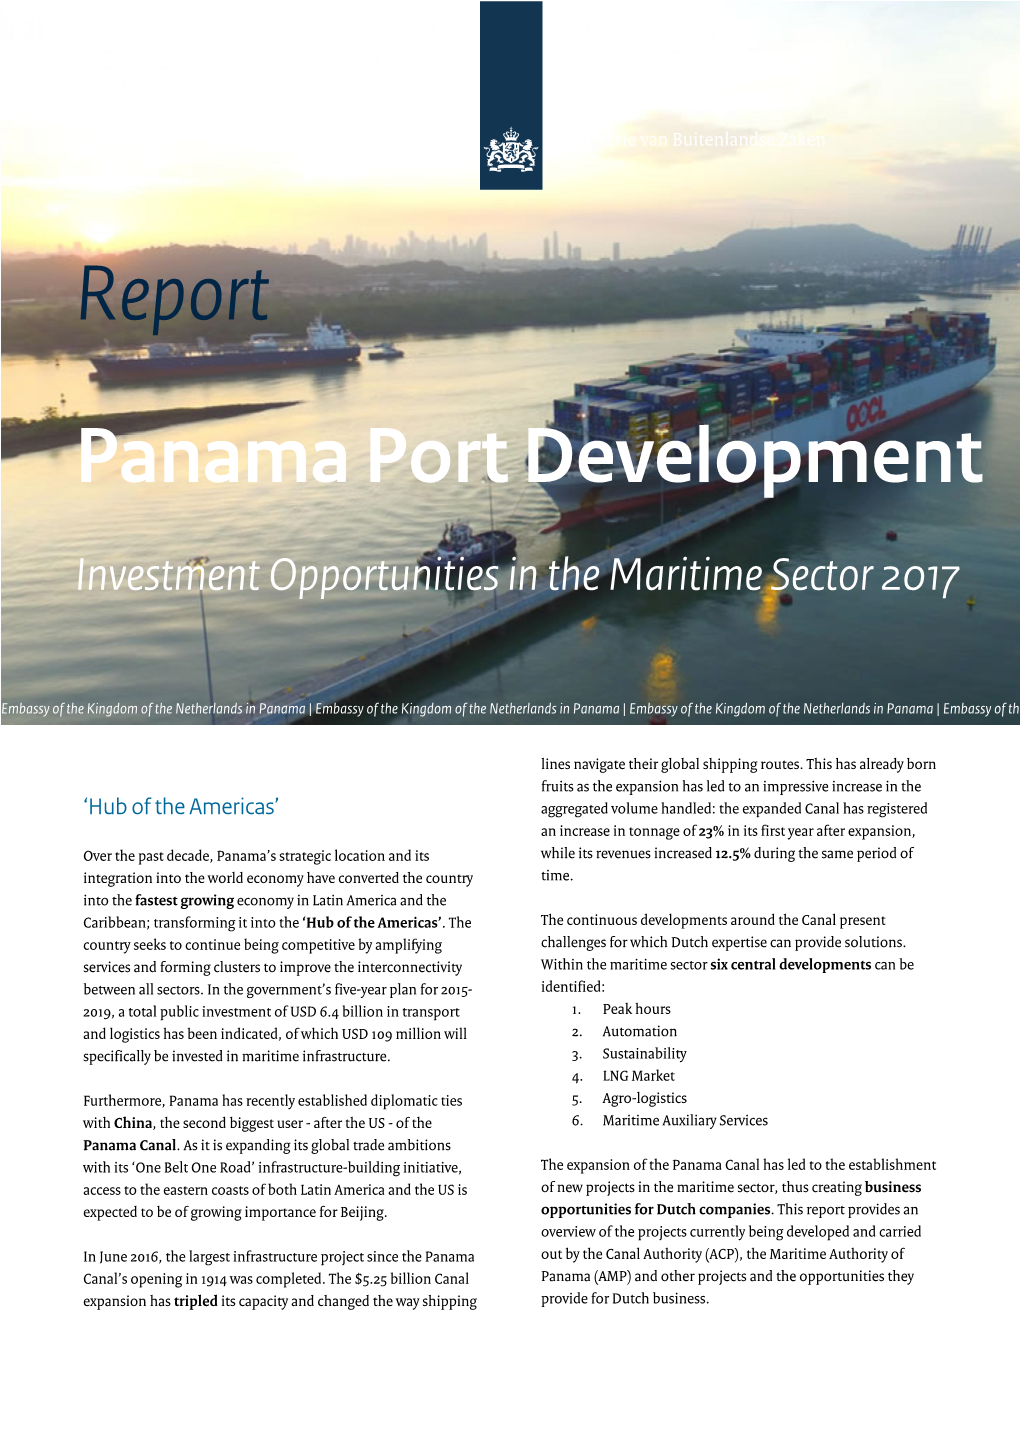 Report Panama Port Development